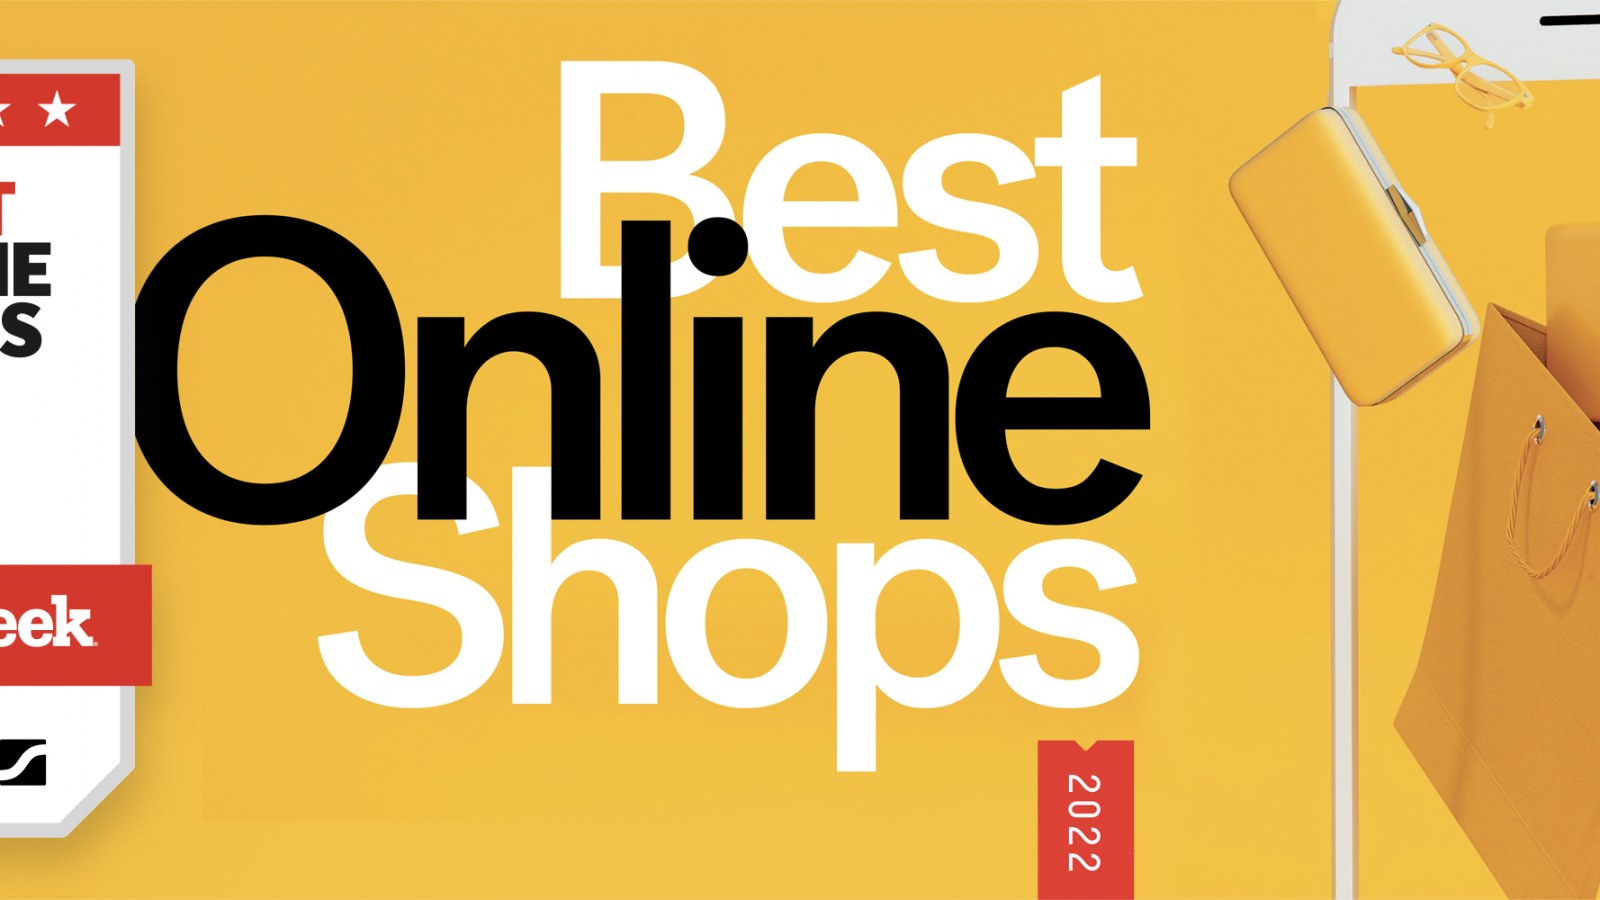  Online store